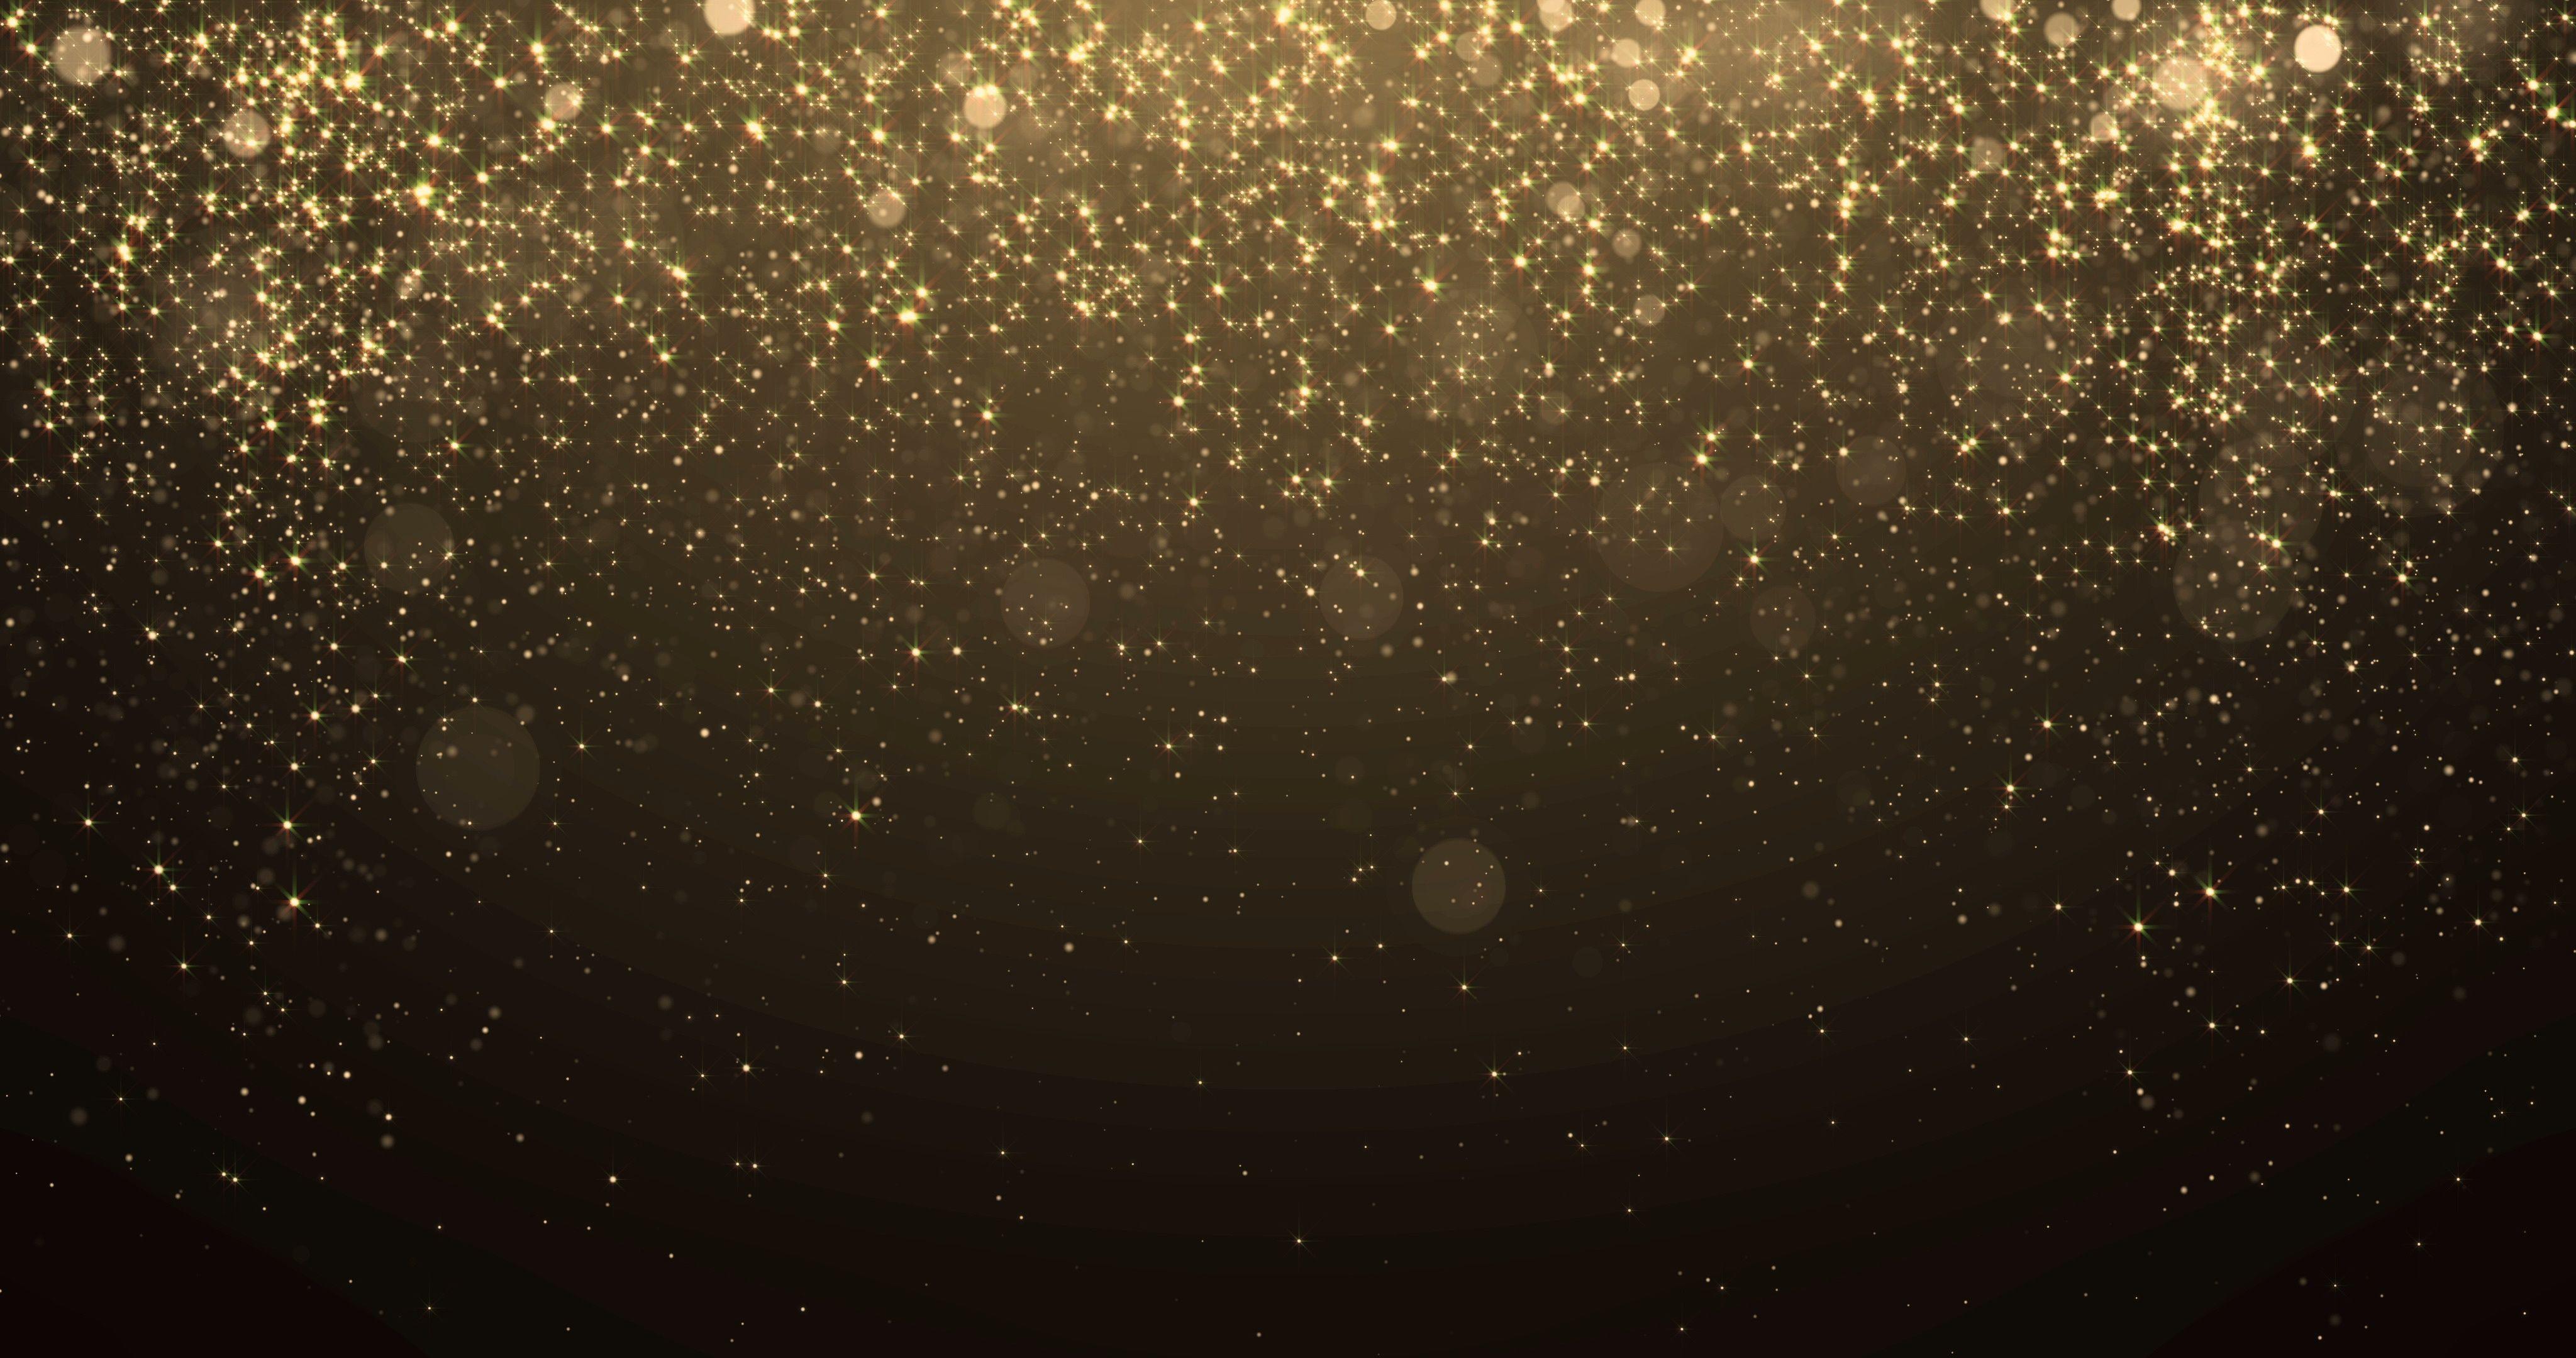 Video: Gold glitter background with sparkle shine light confetti